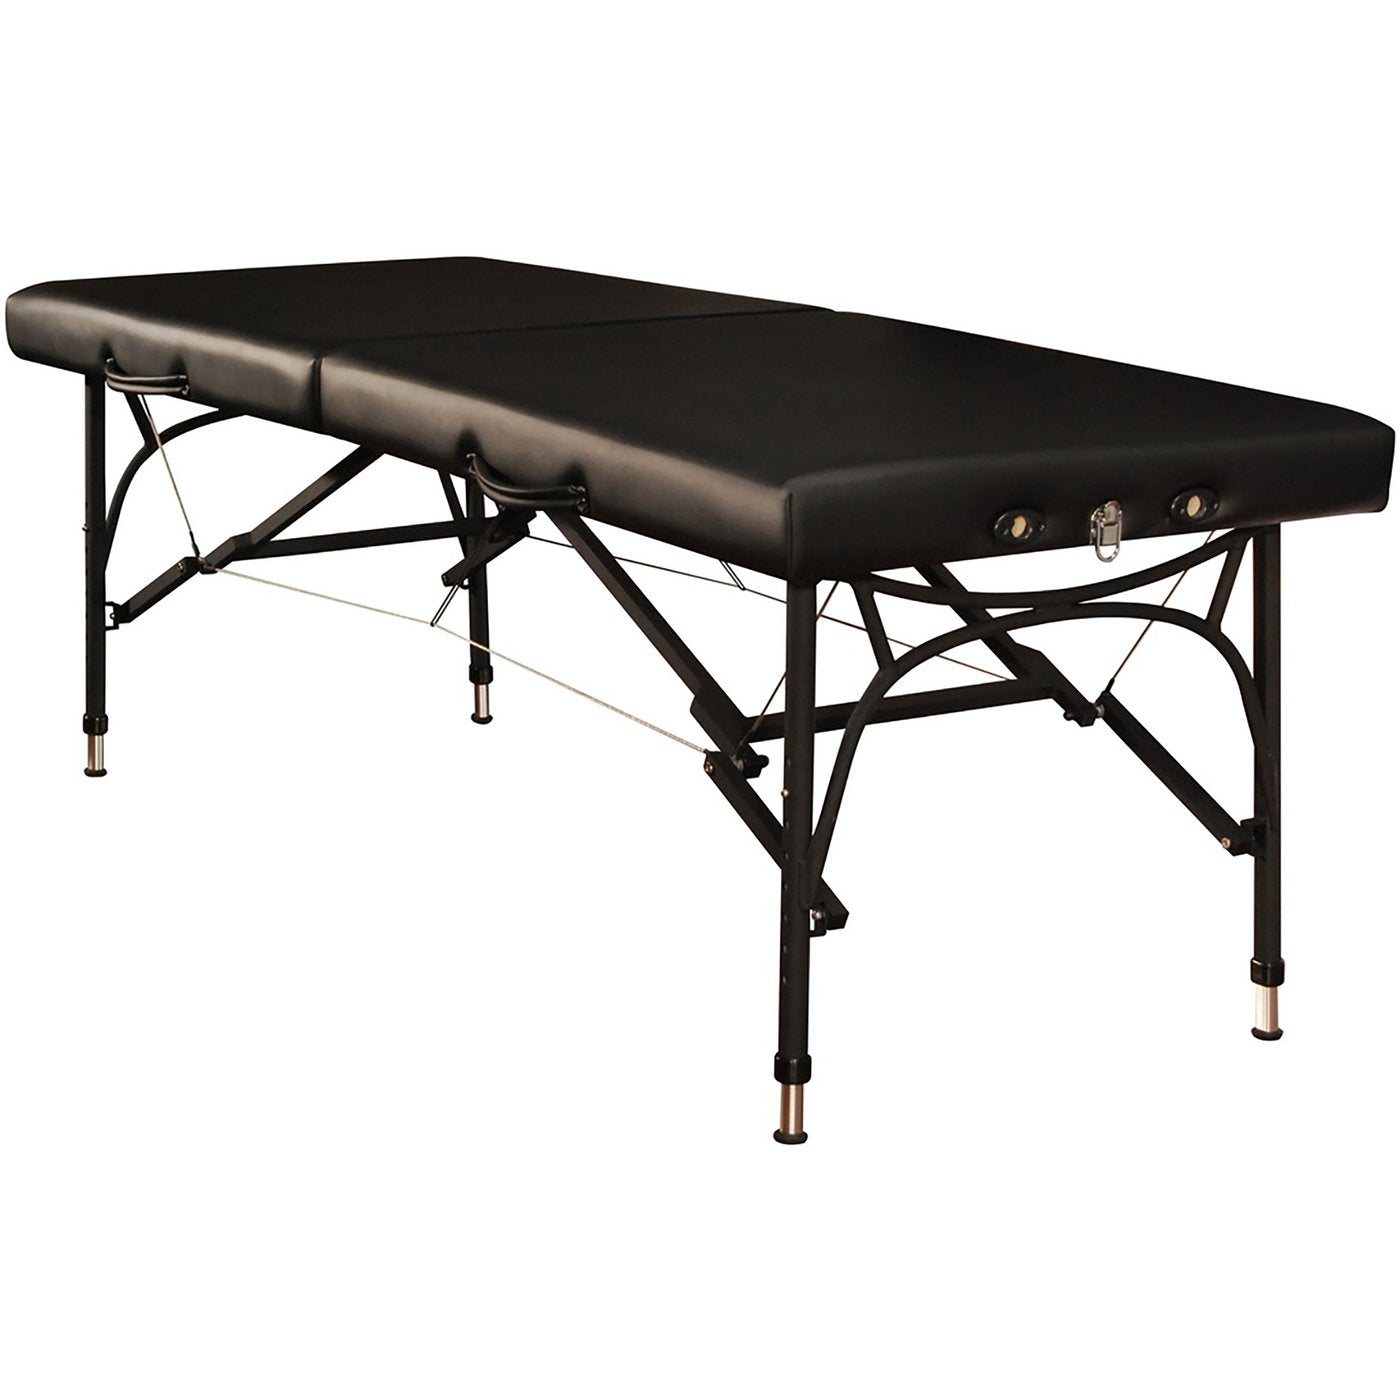 28" Violet Sport Size Ultra Lightweight Aluminum Portable Massage Table Package Black